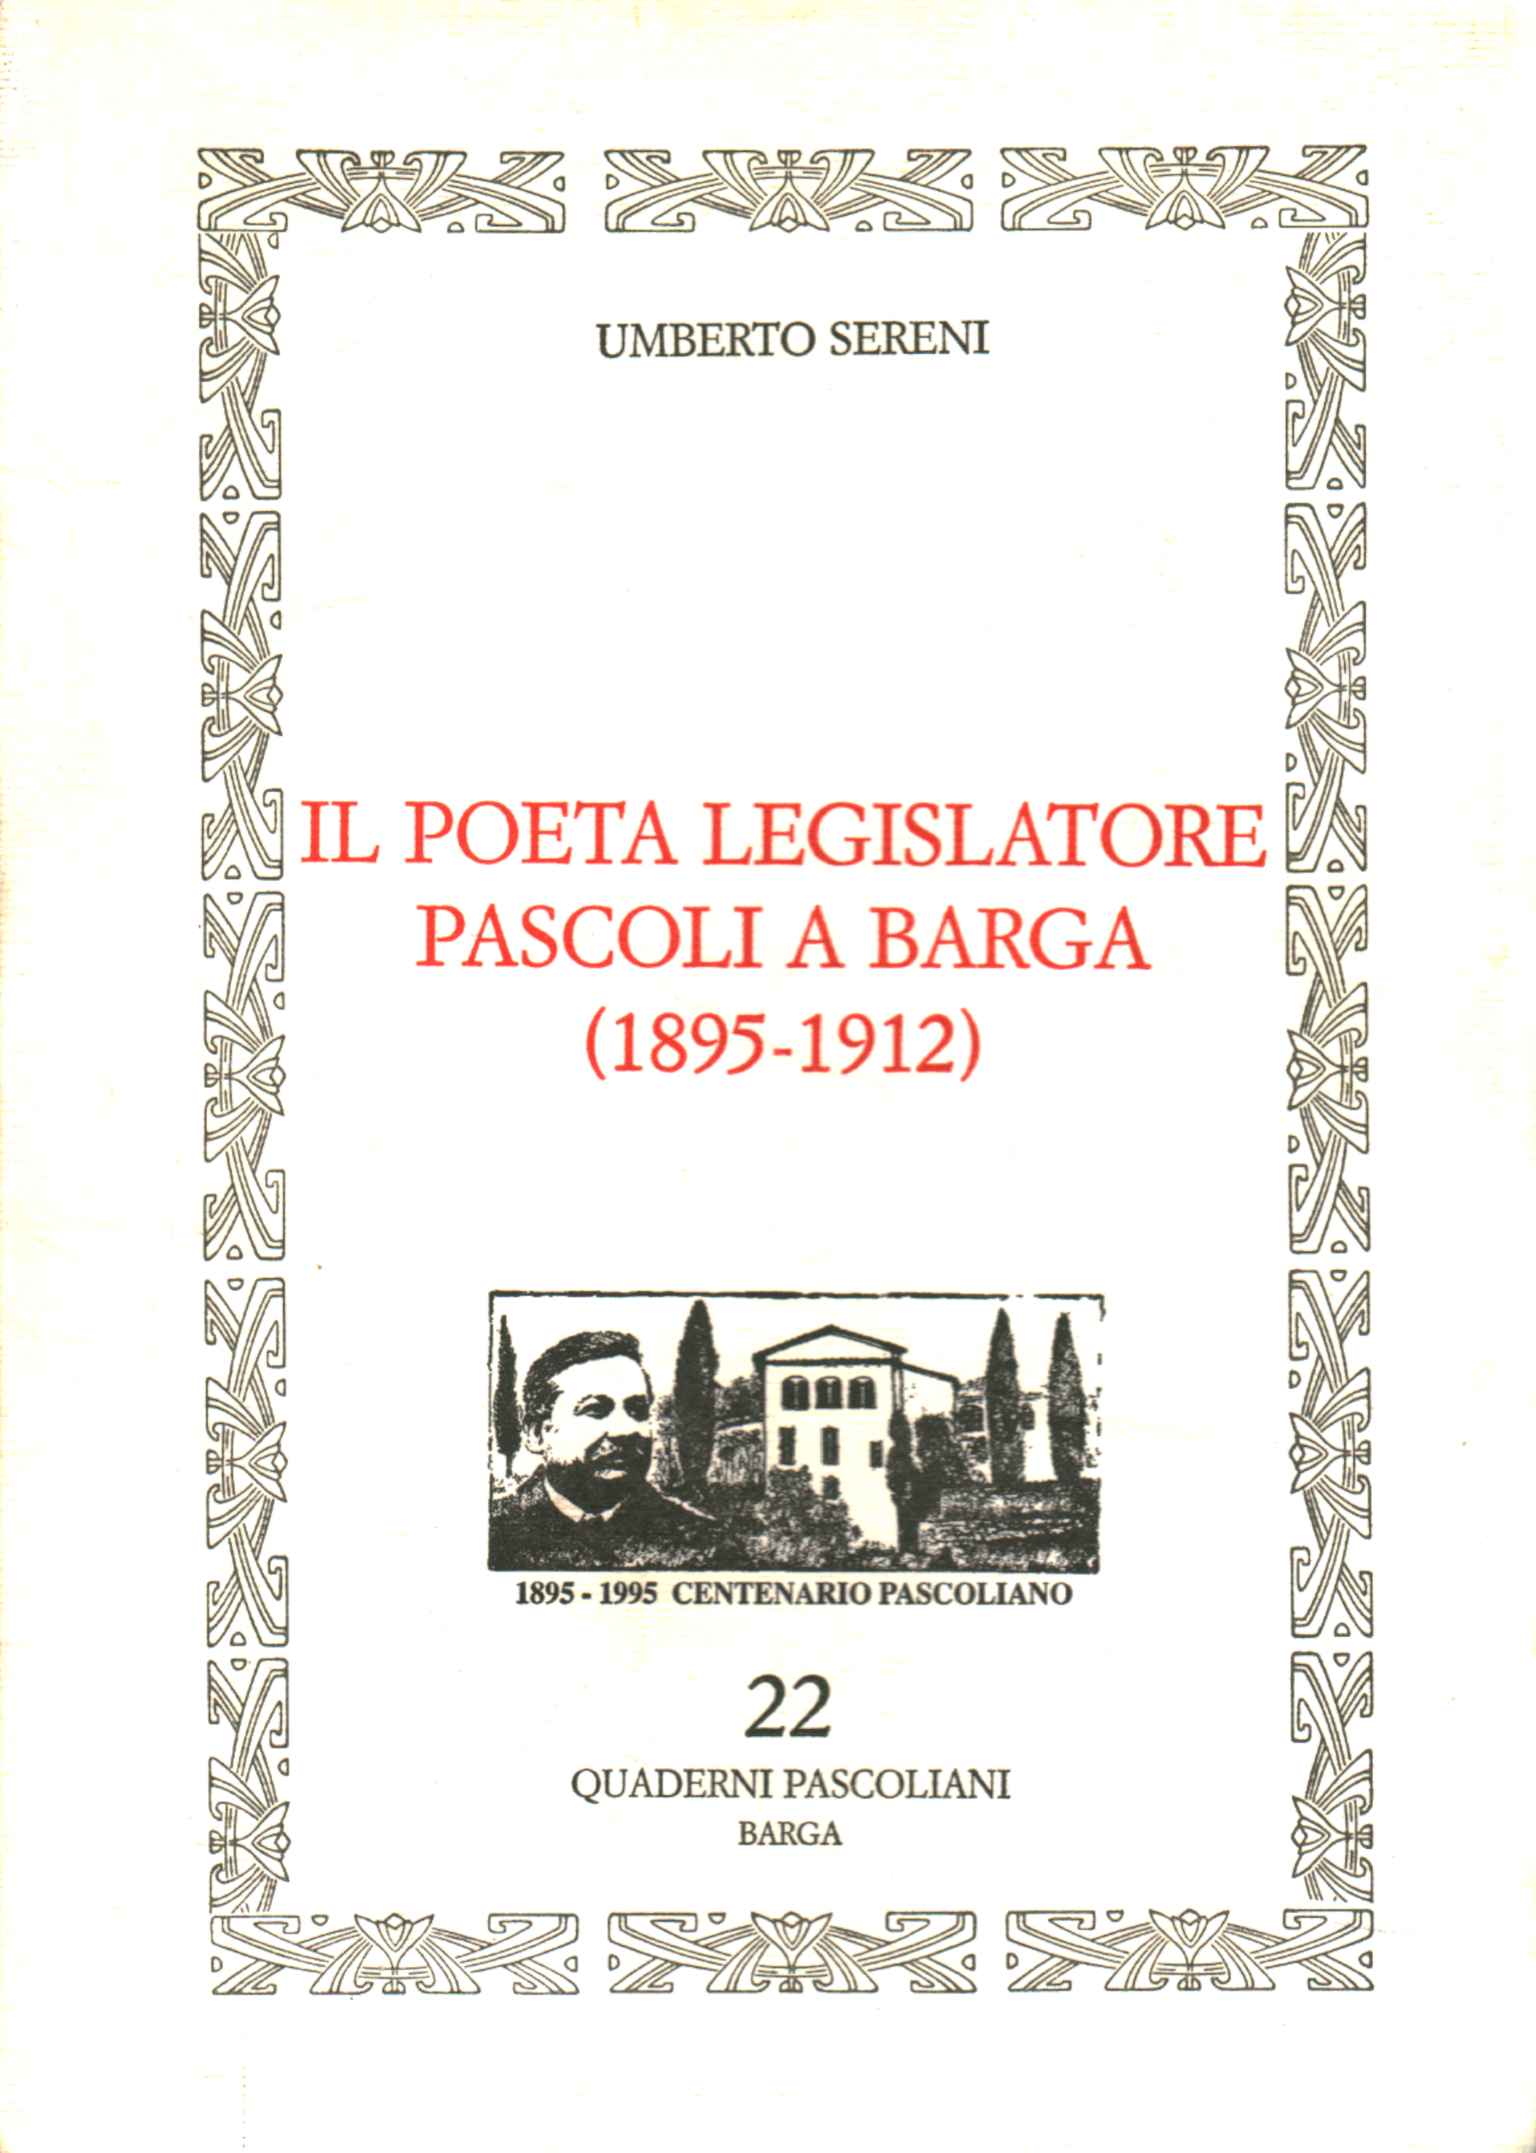 El poeta legislador Pascoli en Barga (